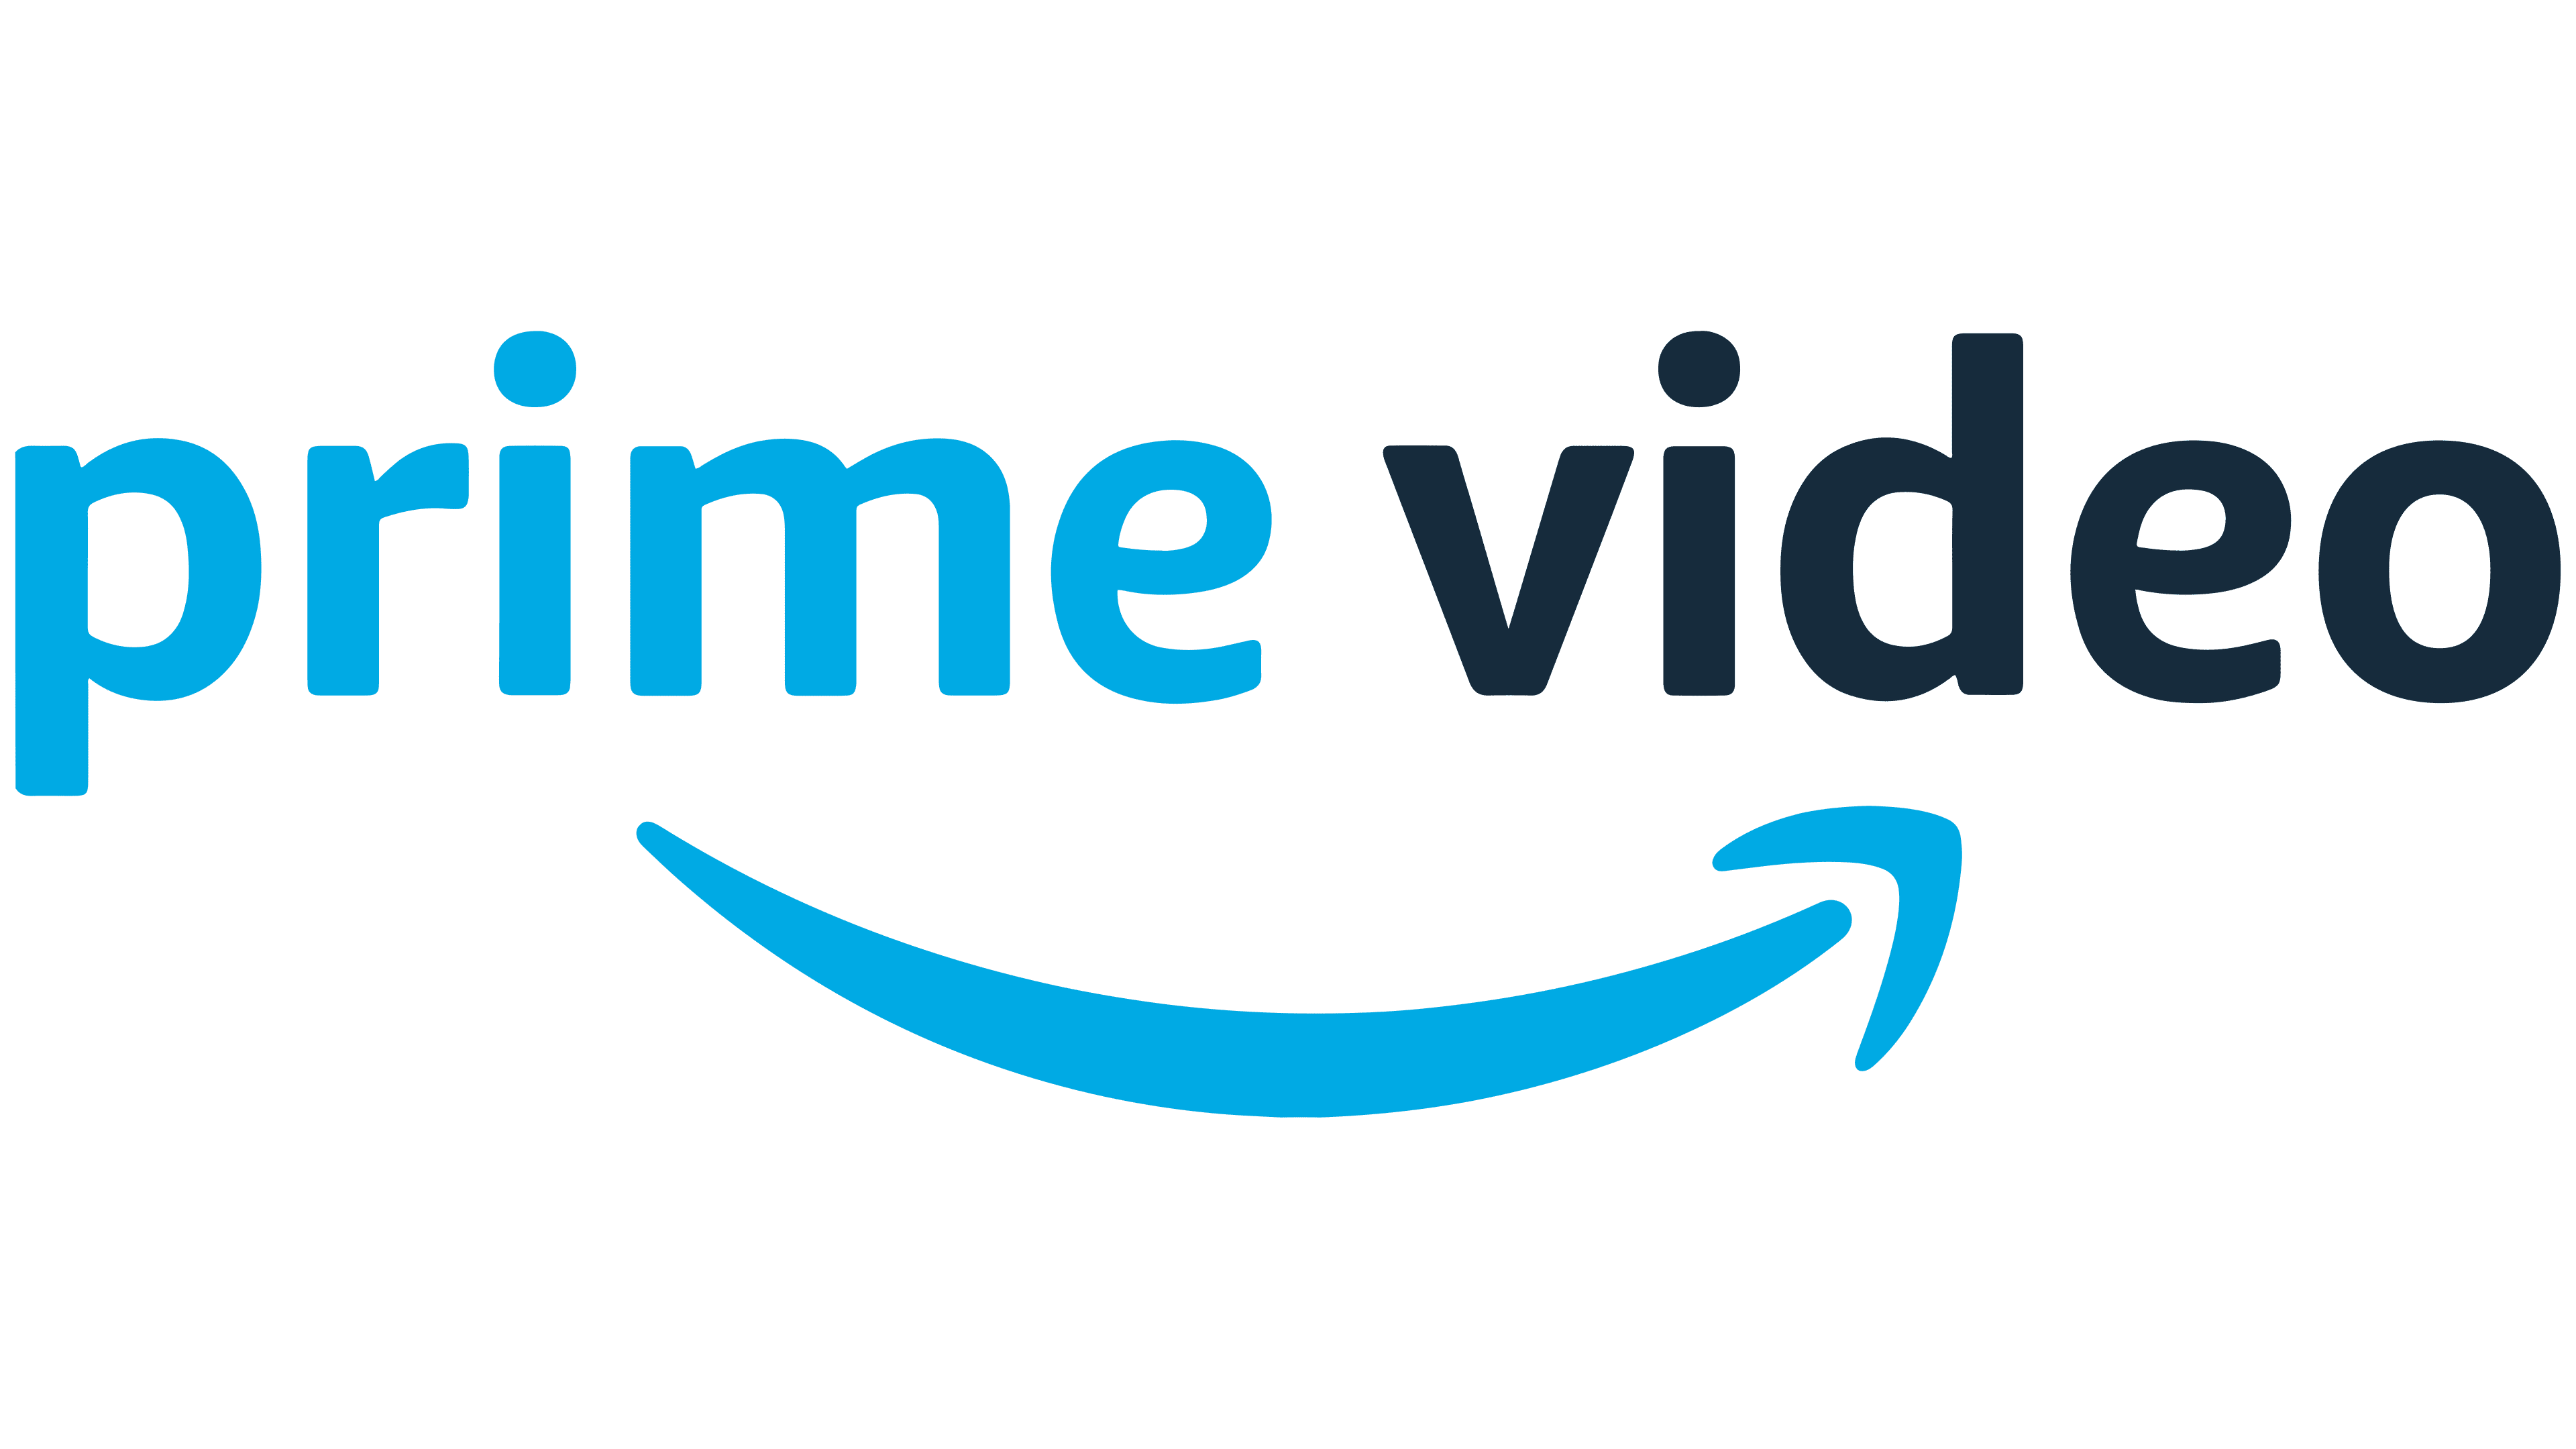 Logo De Amazon Prime Video